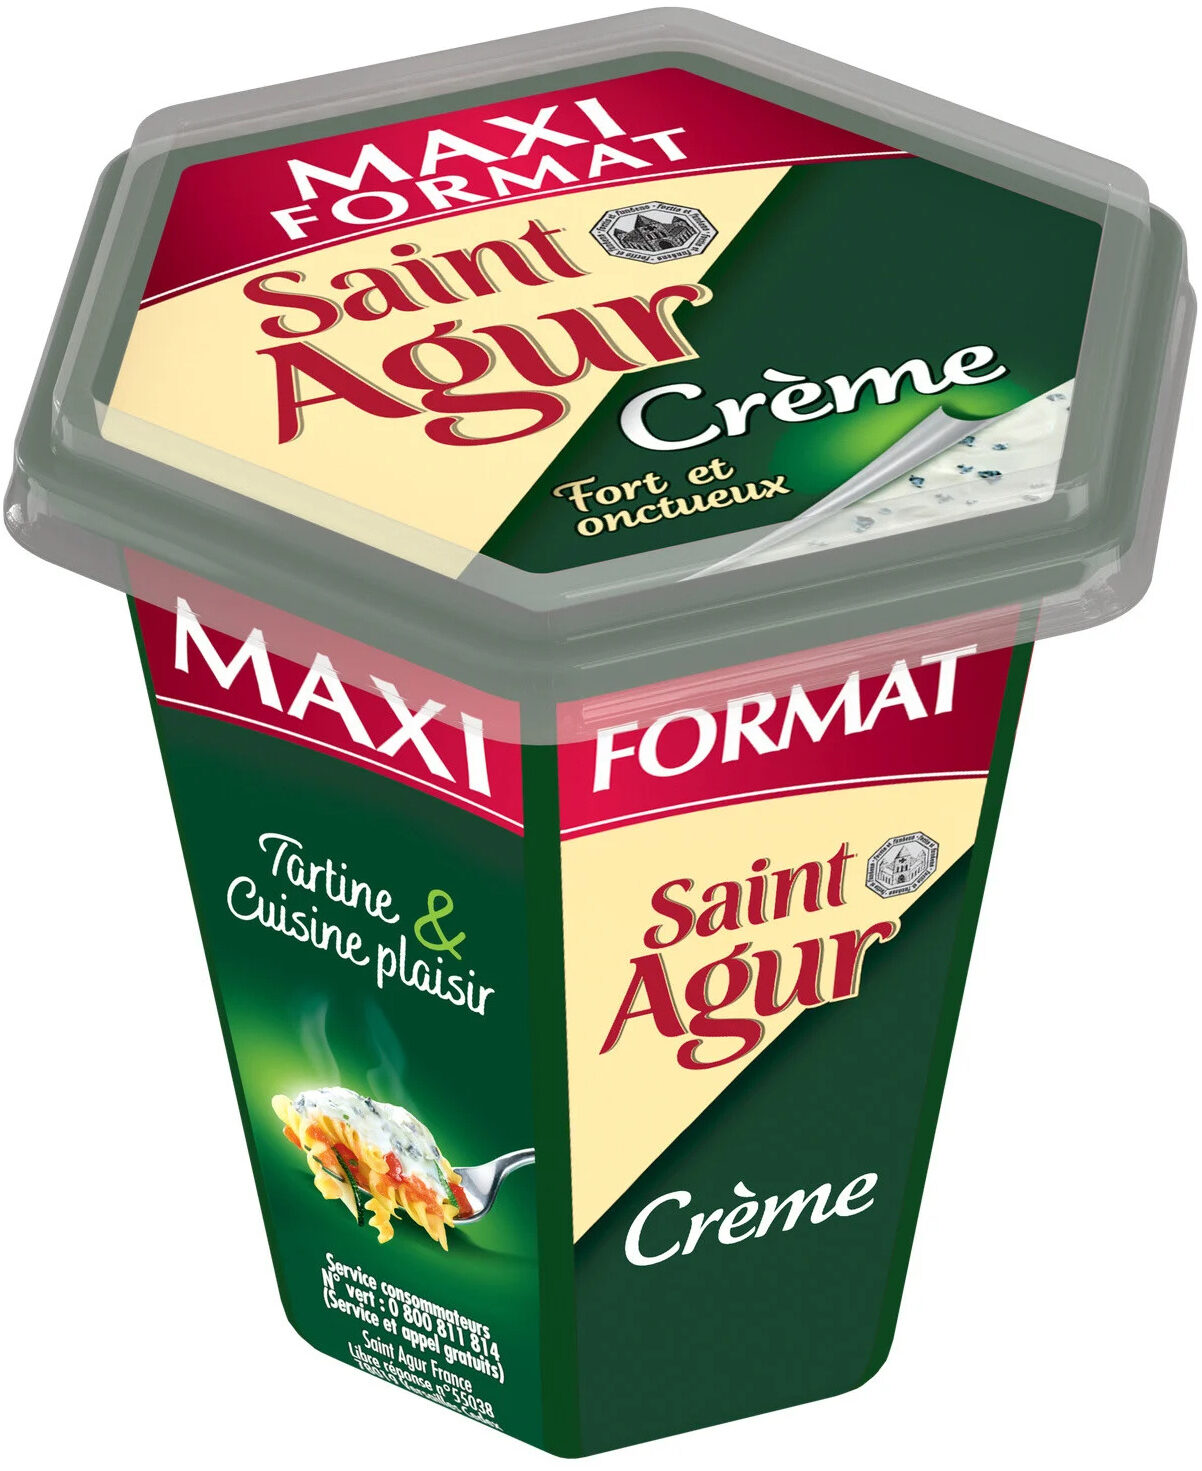 Crème Tartine & Cuisine plaisir - Produkt - fr